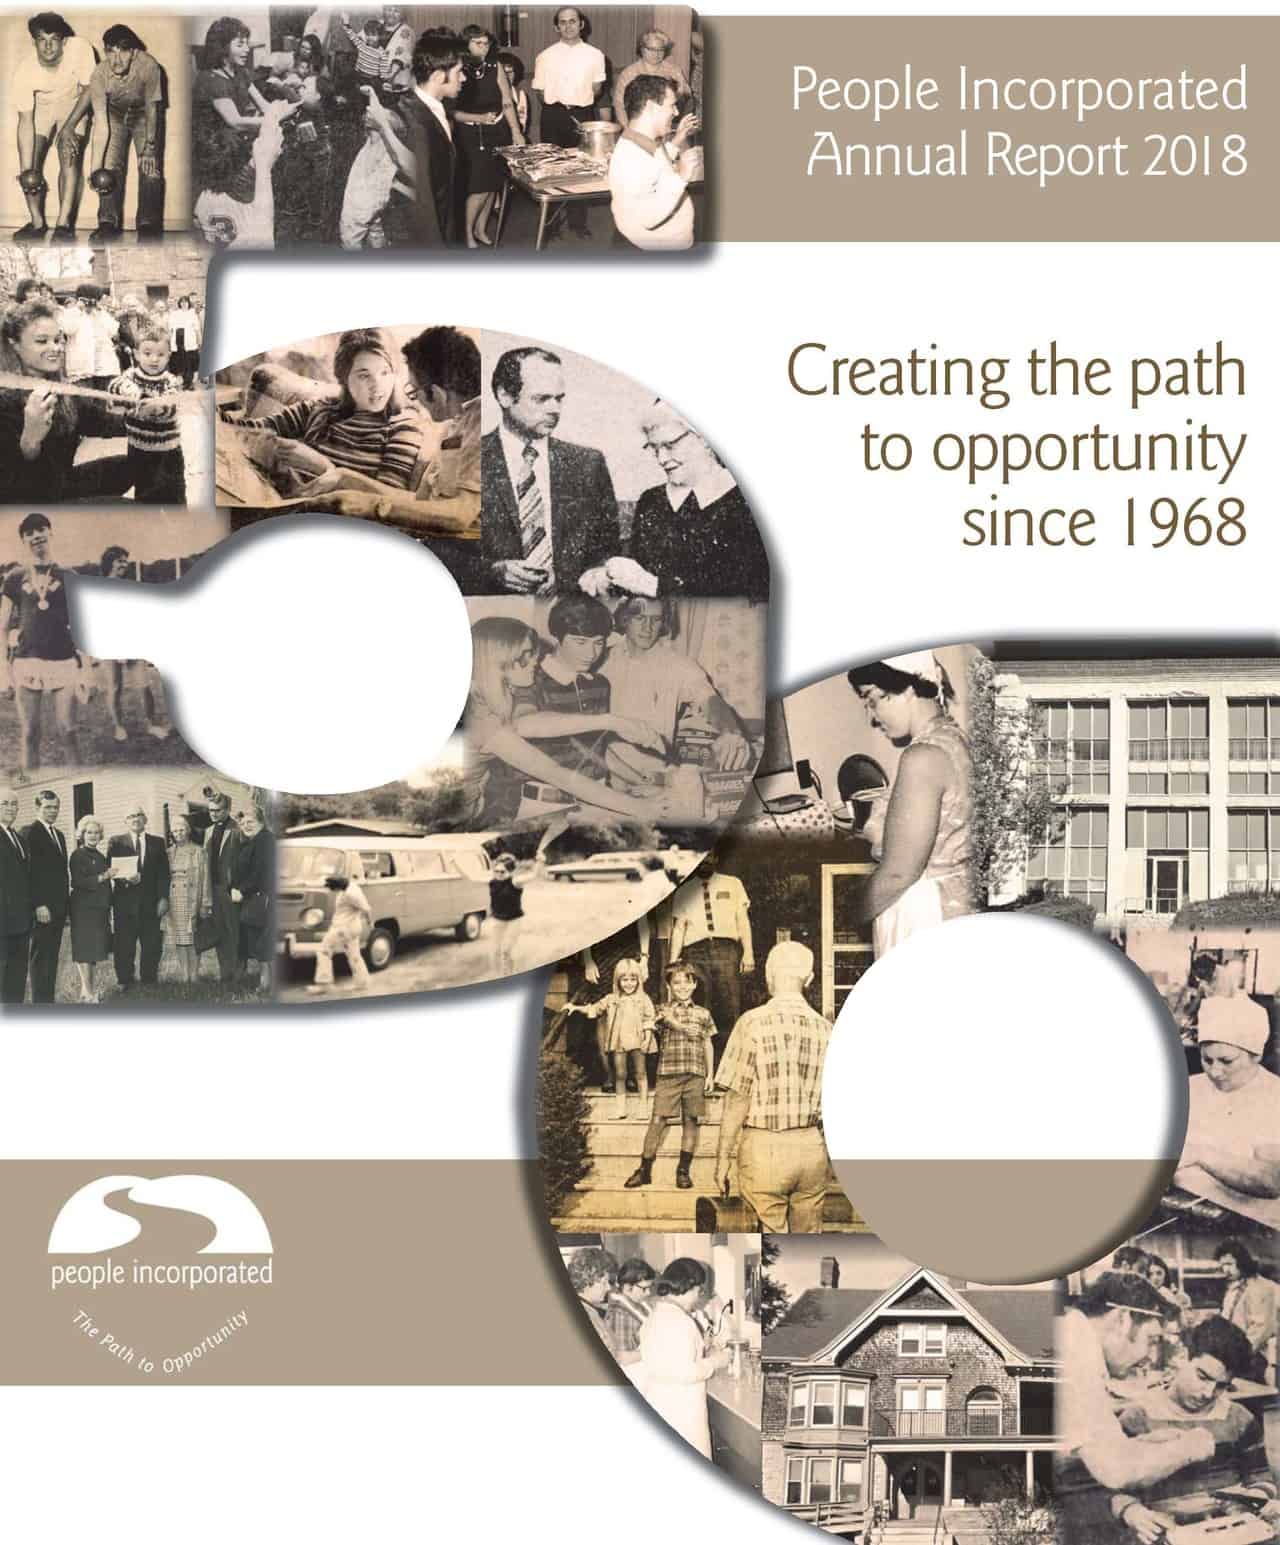 2018 Annual Report cover